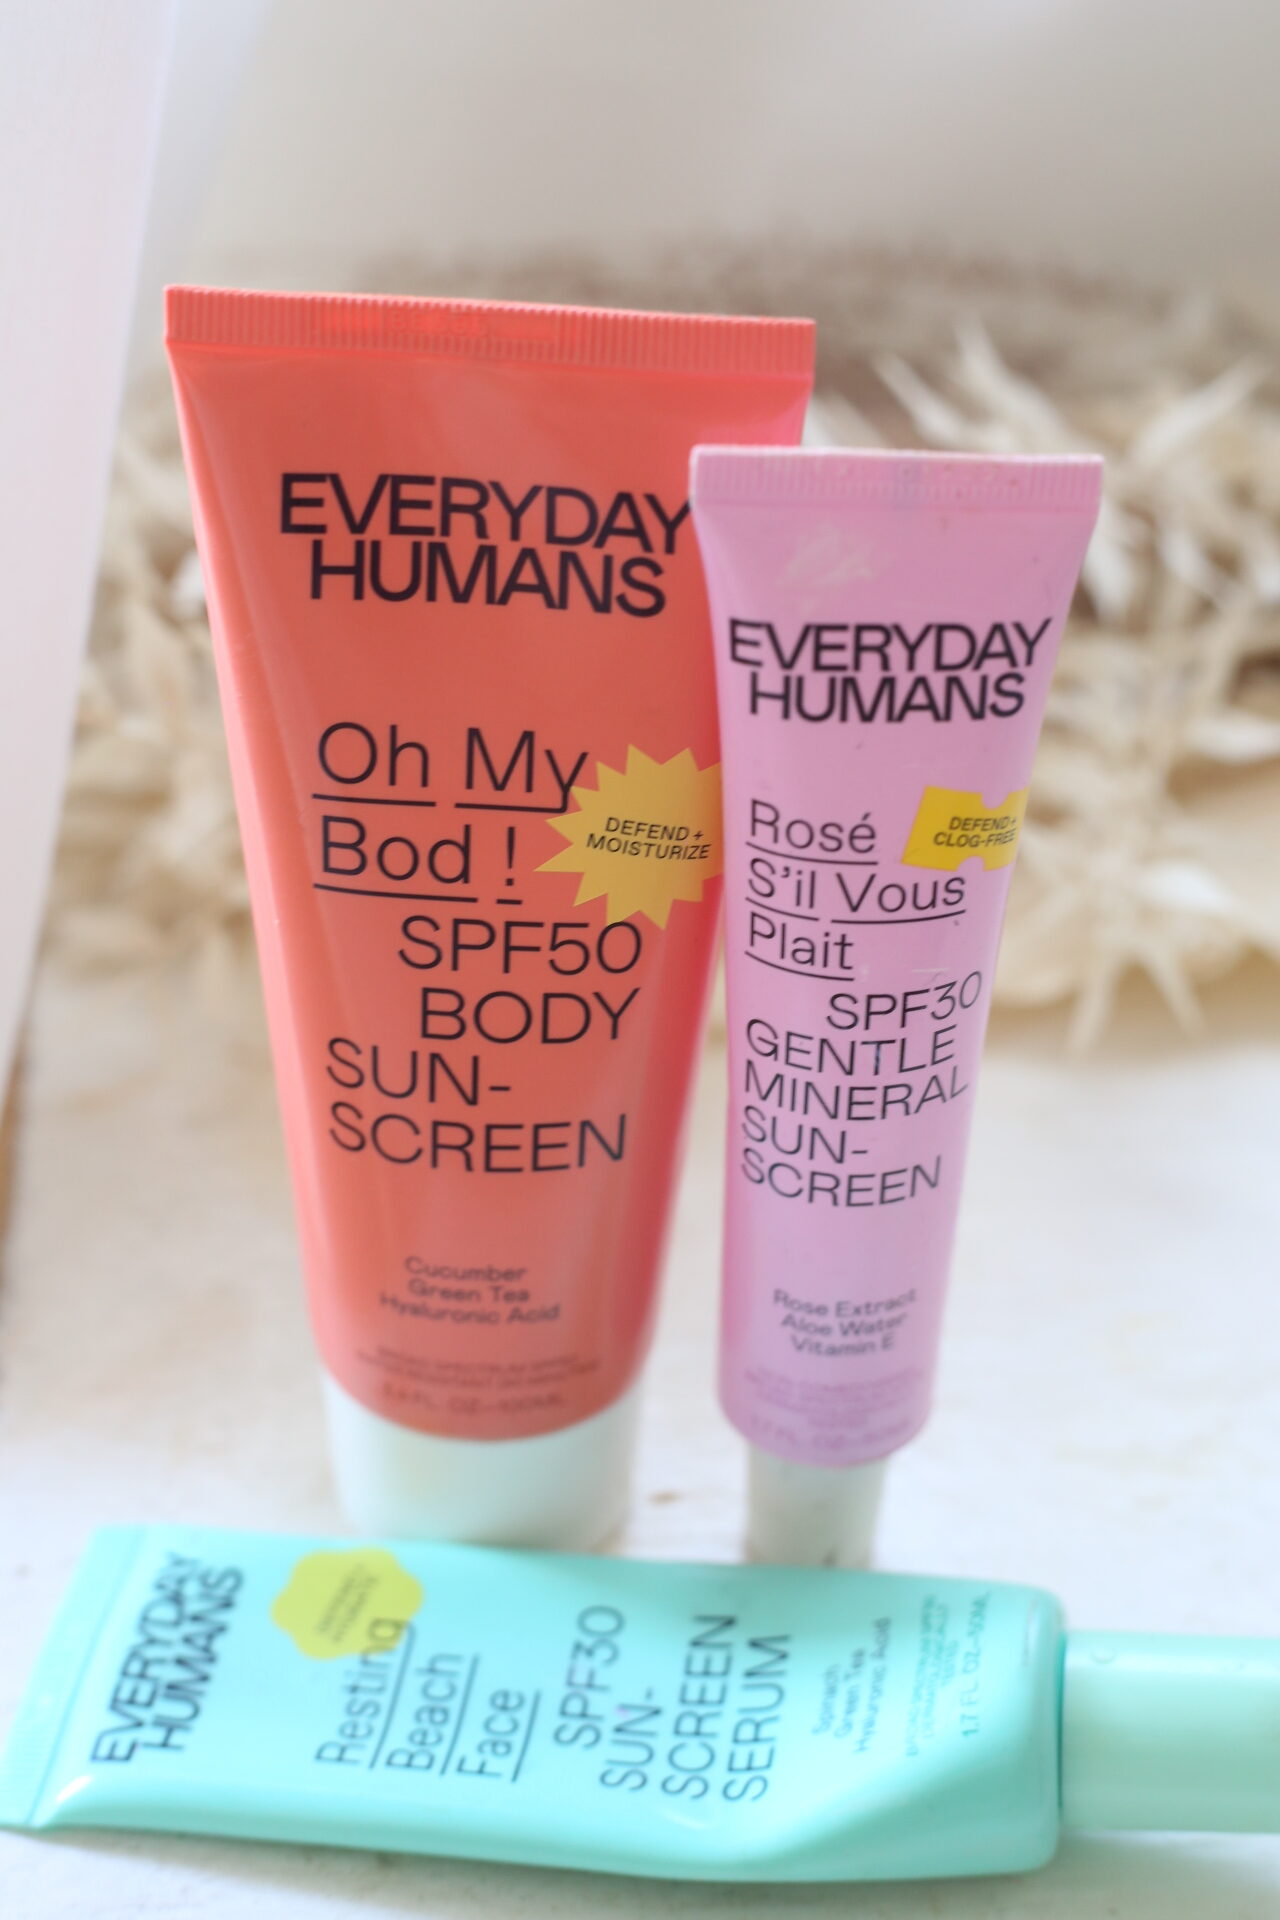 Everyday humans sunscreen